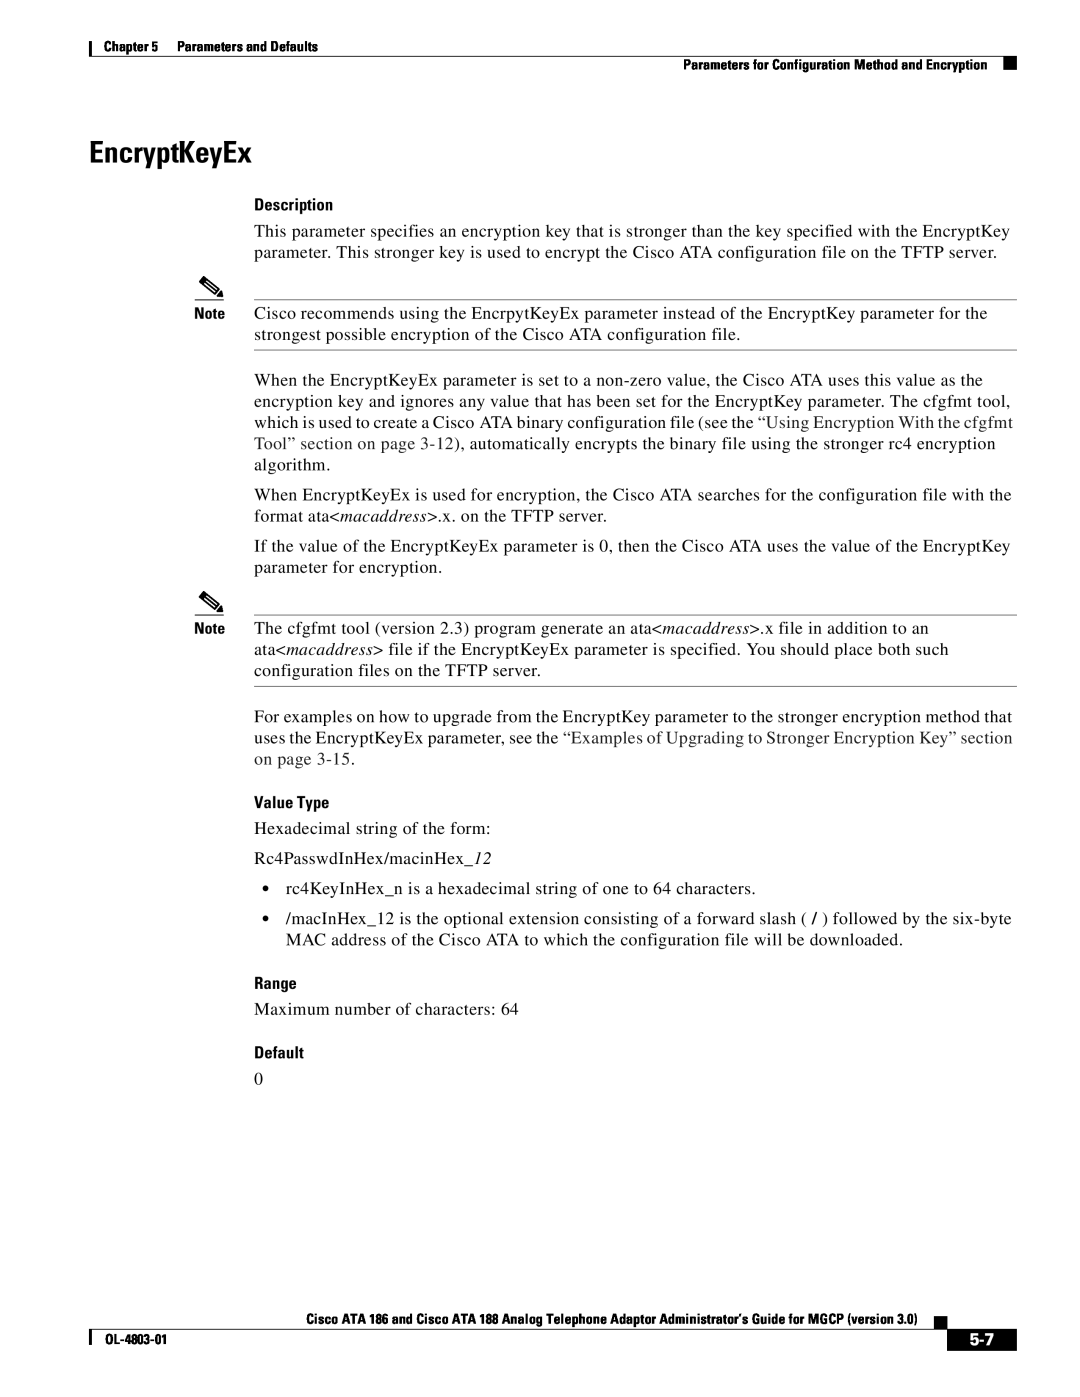 Cisco Systems ATA 188, ATA 186 manual EncryptKeyEx, Description, Value Type, Range, Default 